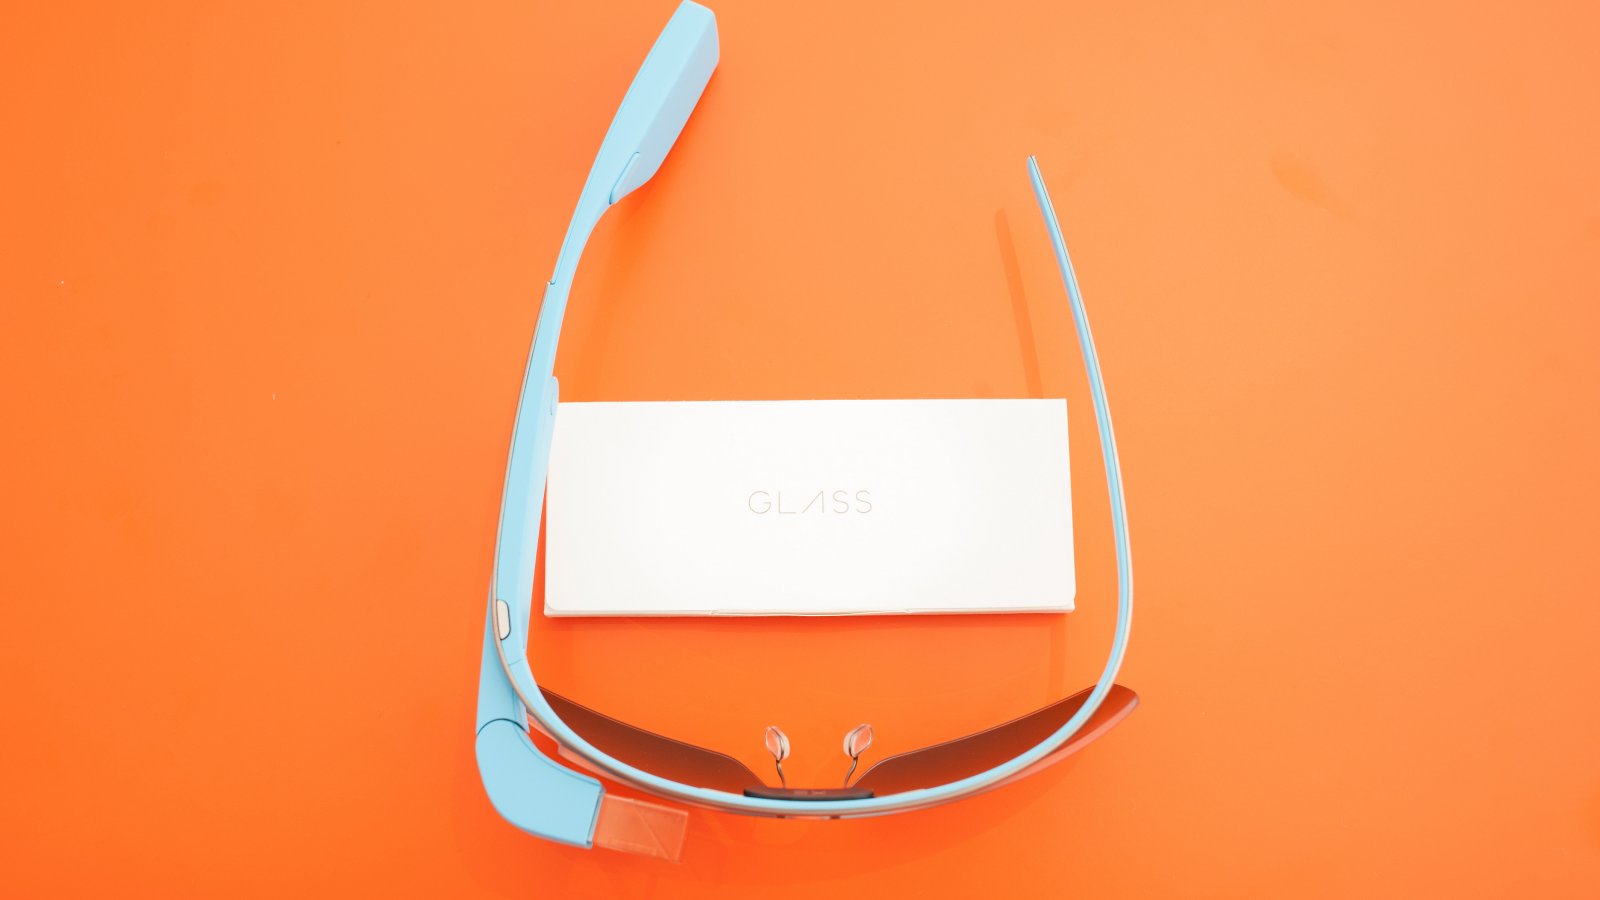 Vervangt Google Glass de chef?